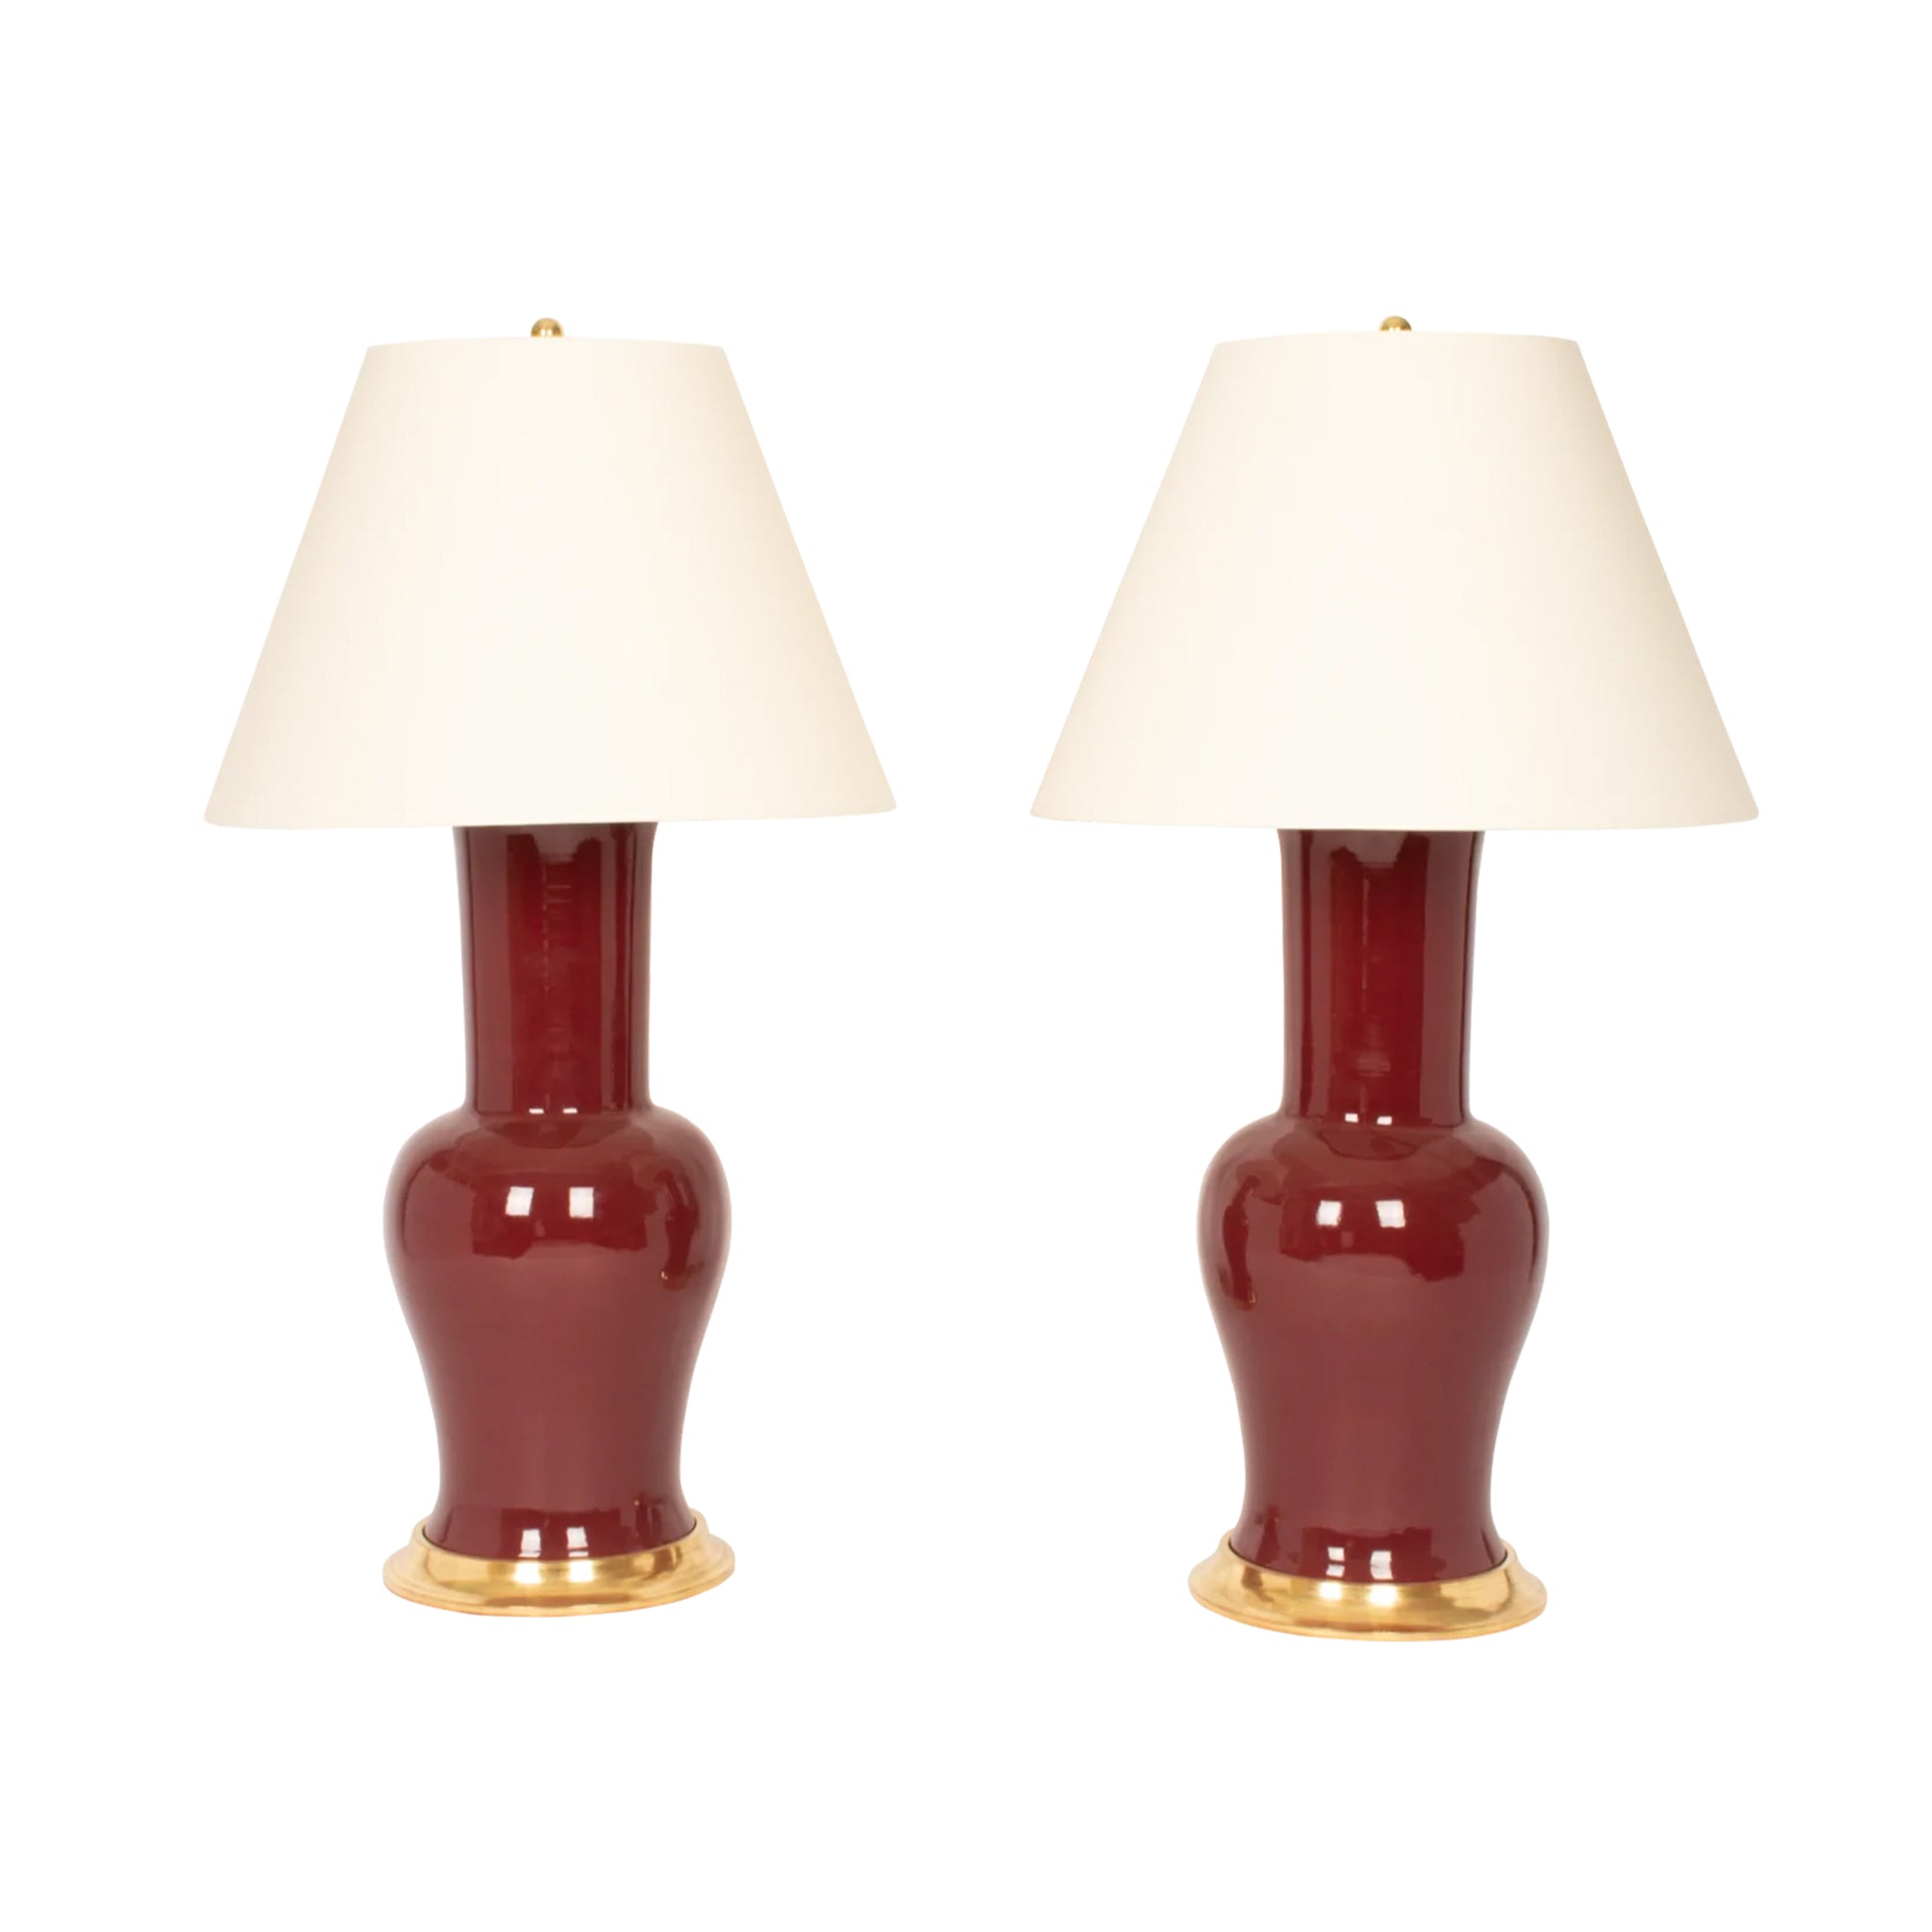 Pair of Garniture Lamps in Claret